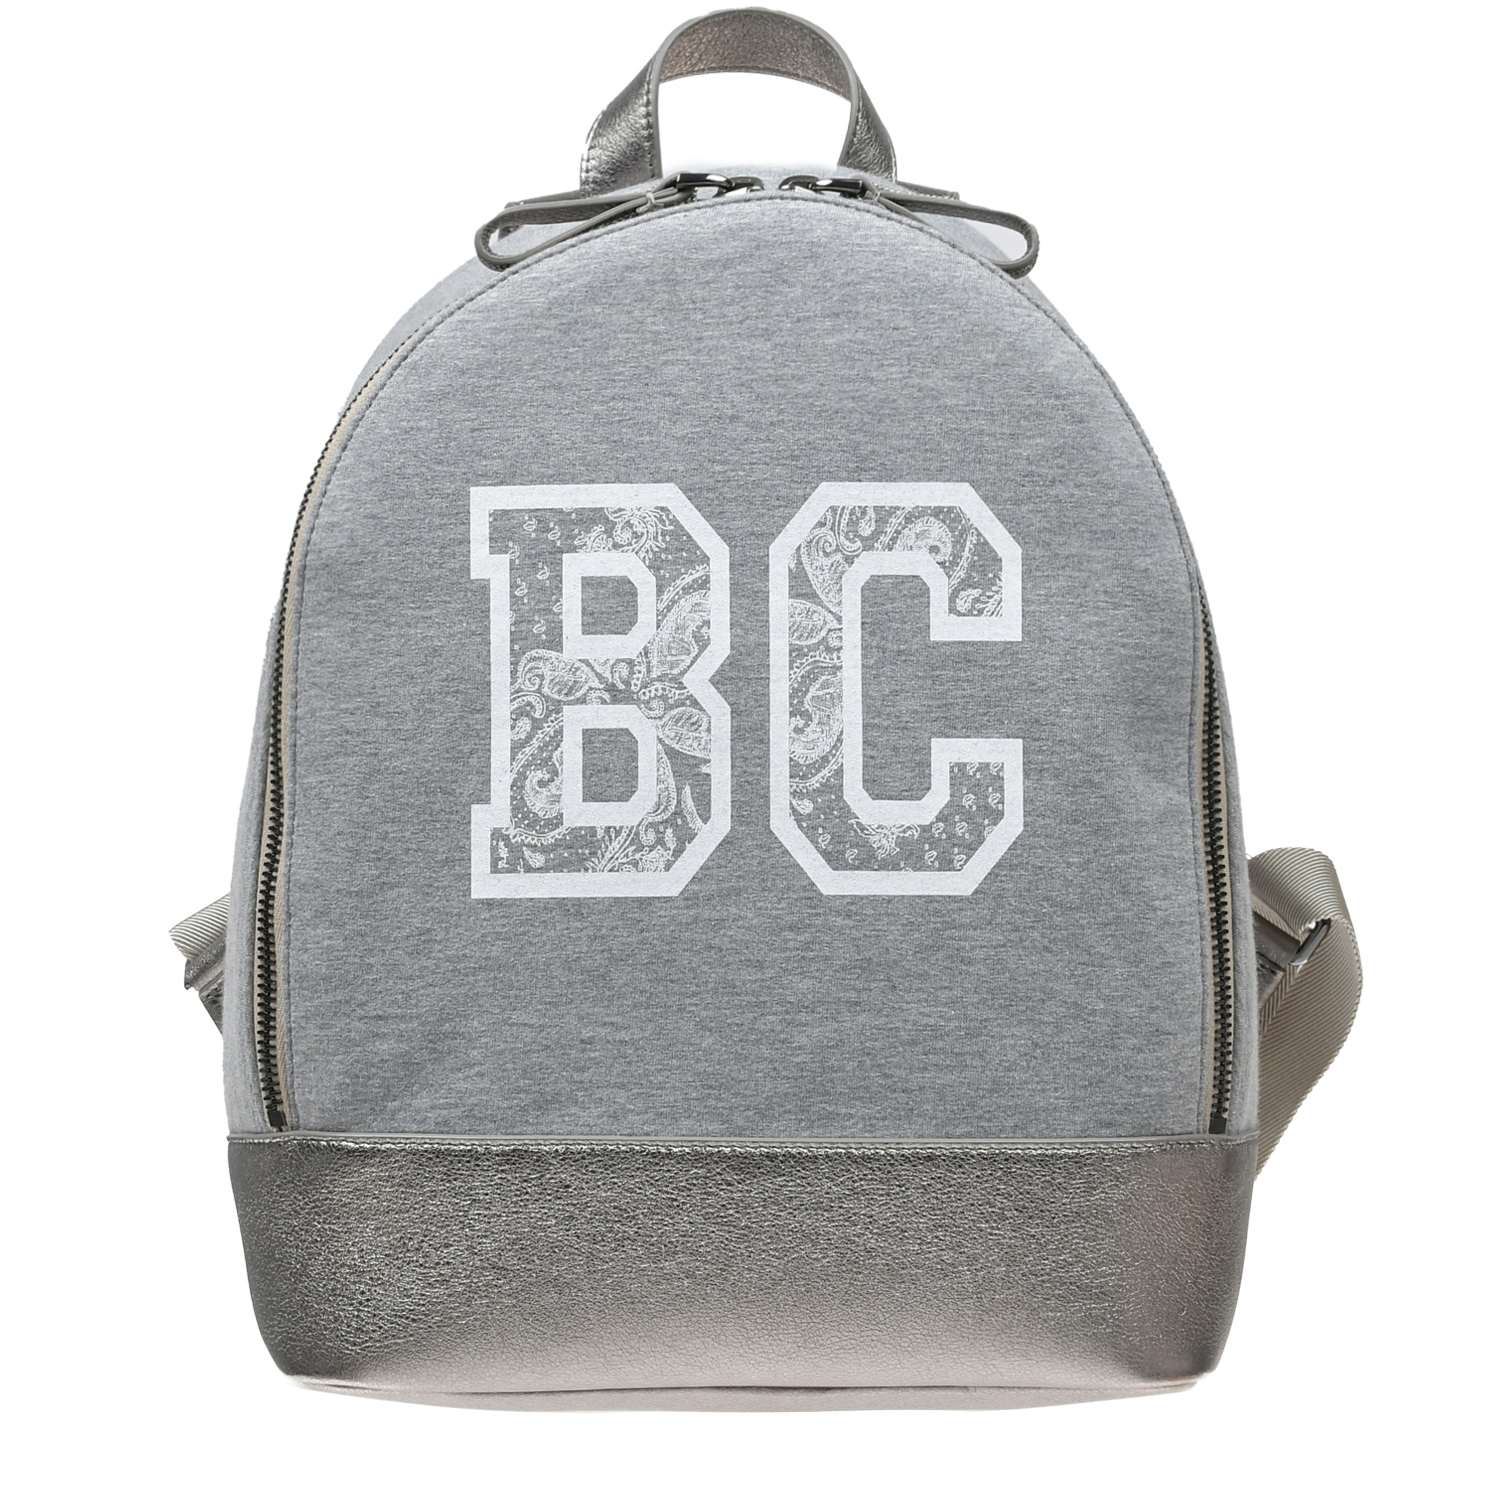 Серый рюкзак с лого Brunello Cucinelli, размер unica